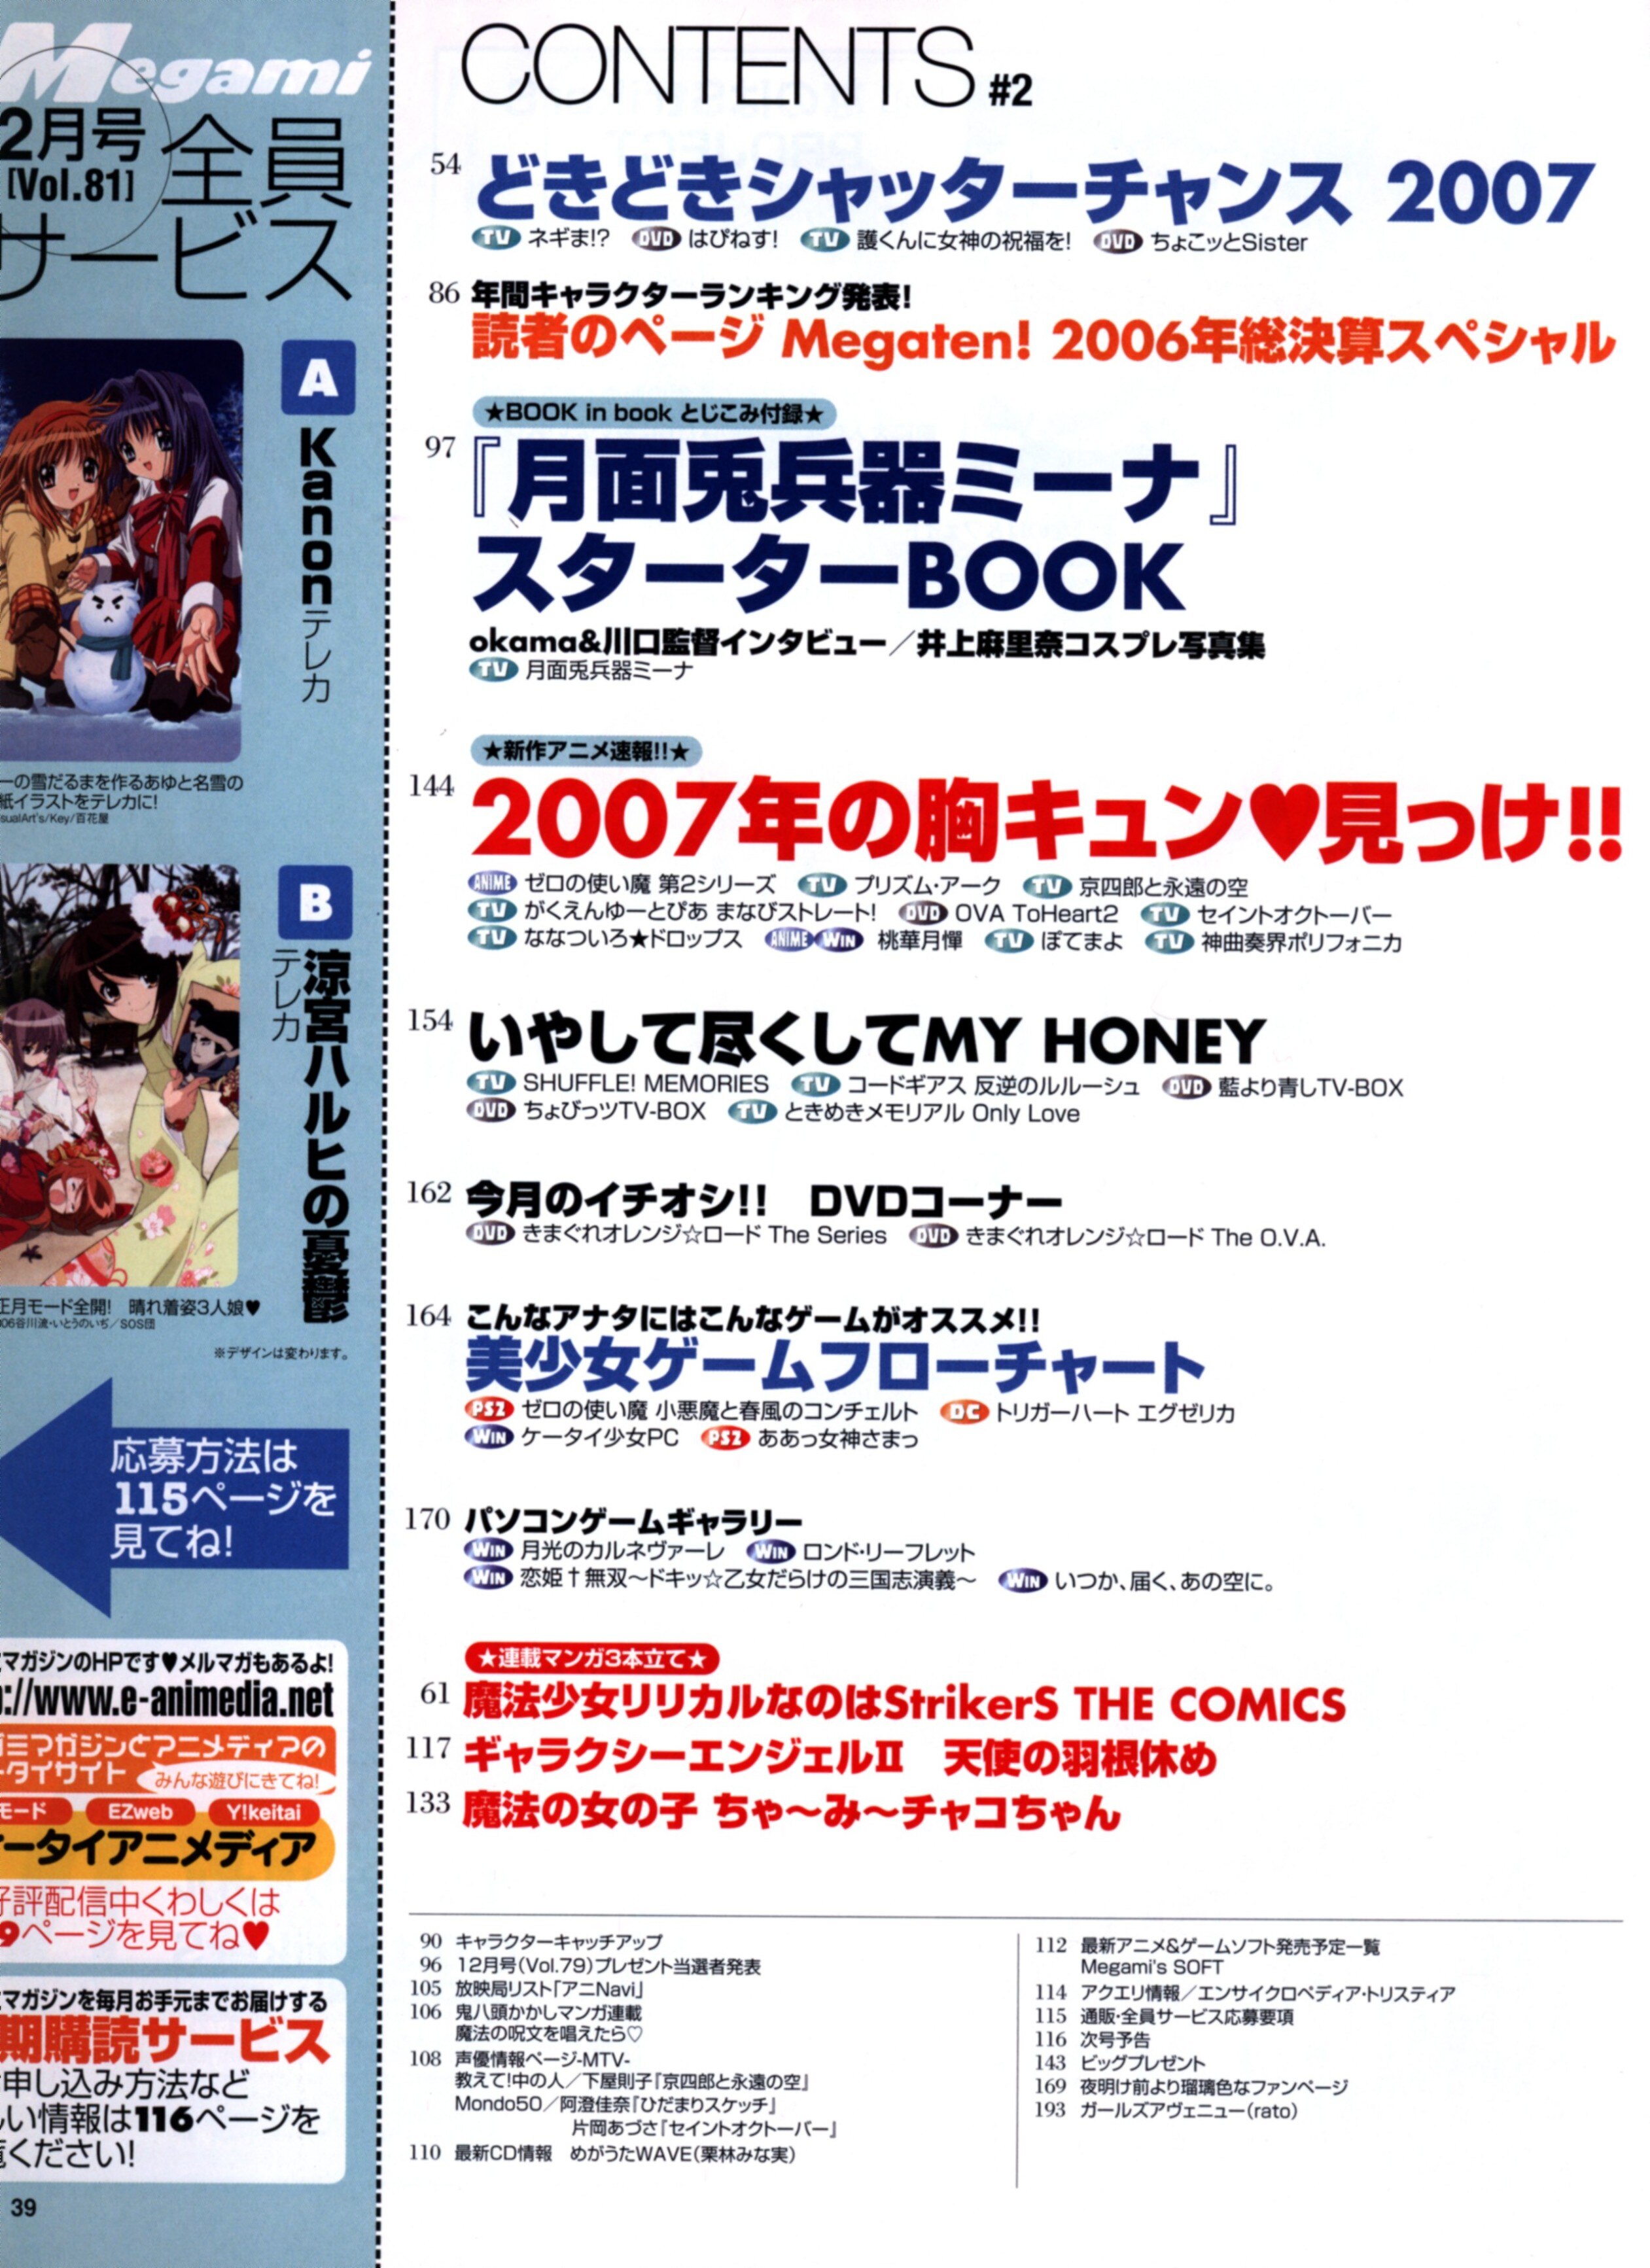 Megami Magazine 07年 平成19年 02月号 付録完品 81 まんだらけ Mandarake